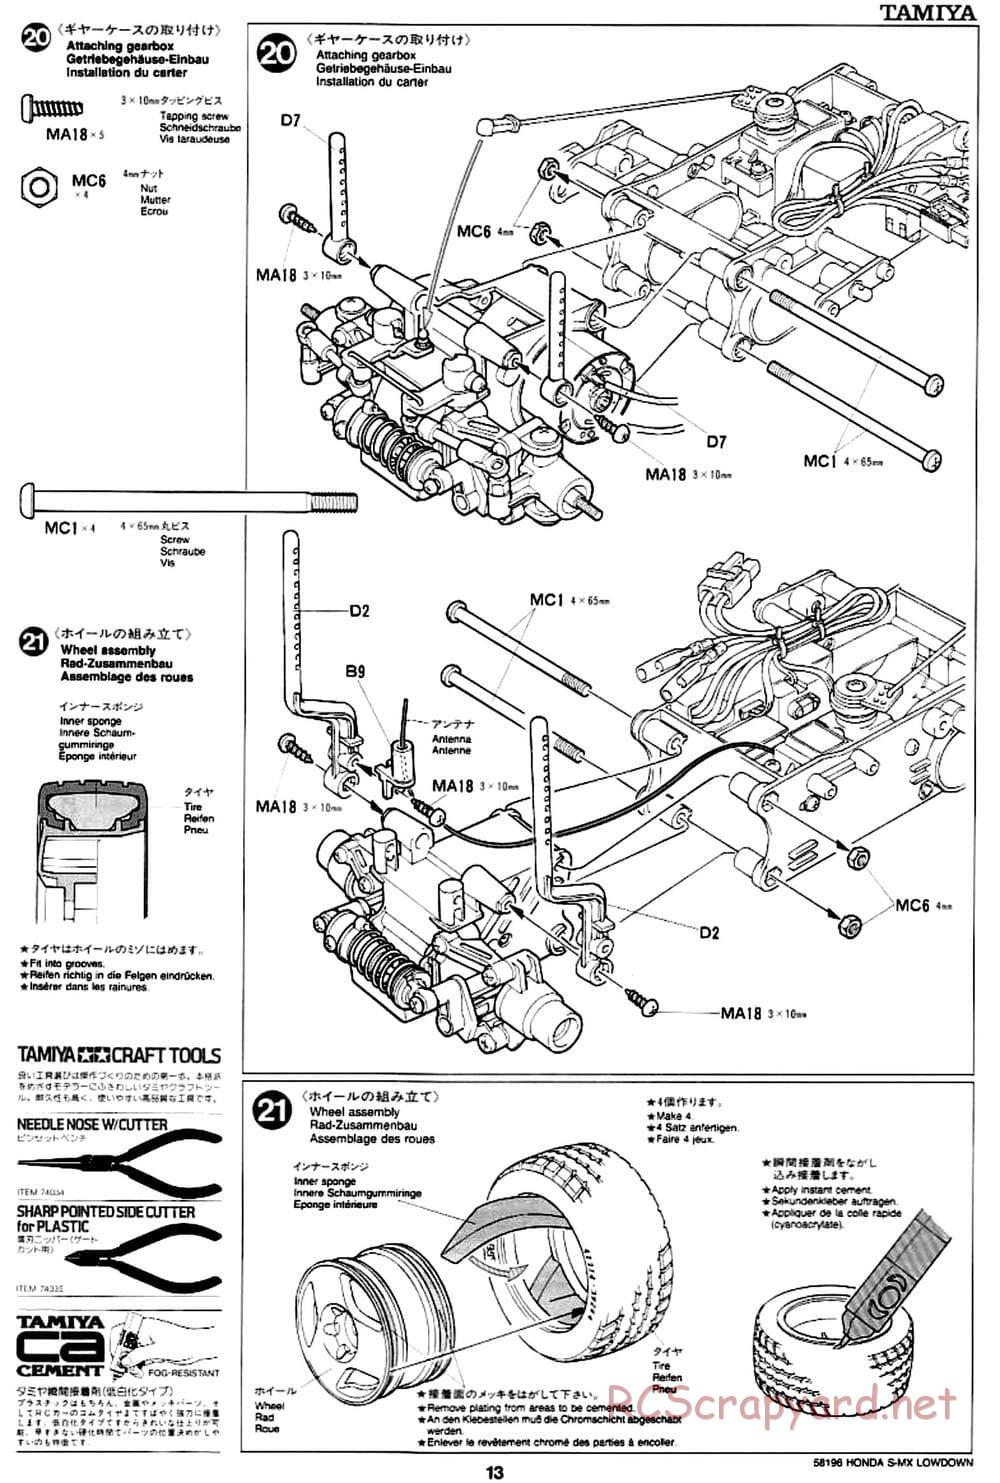 Tamiya - Honda S-MX Lowdown - M01 Chassis - Manual - Page 13